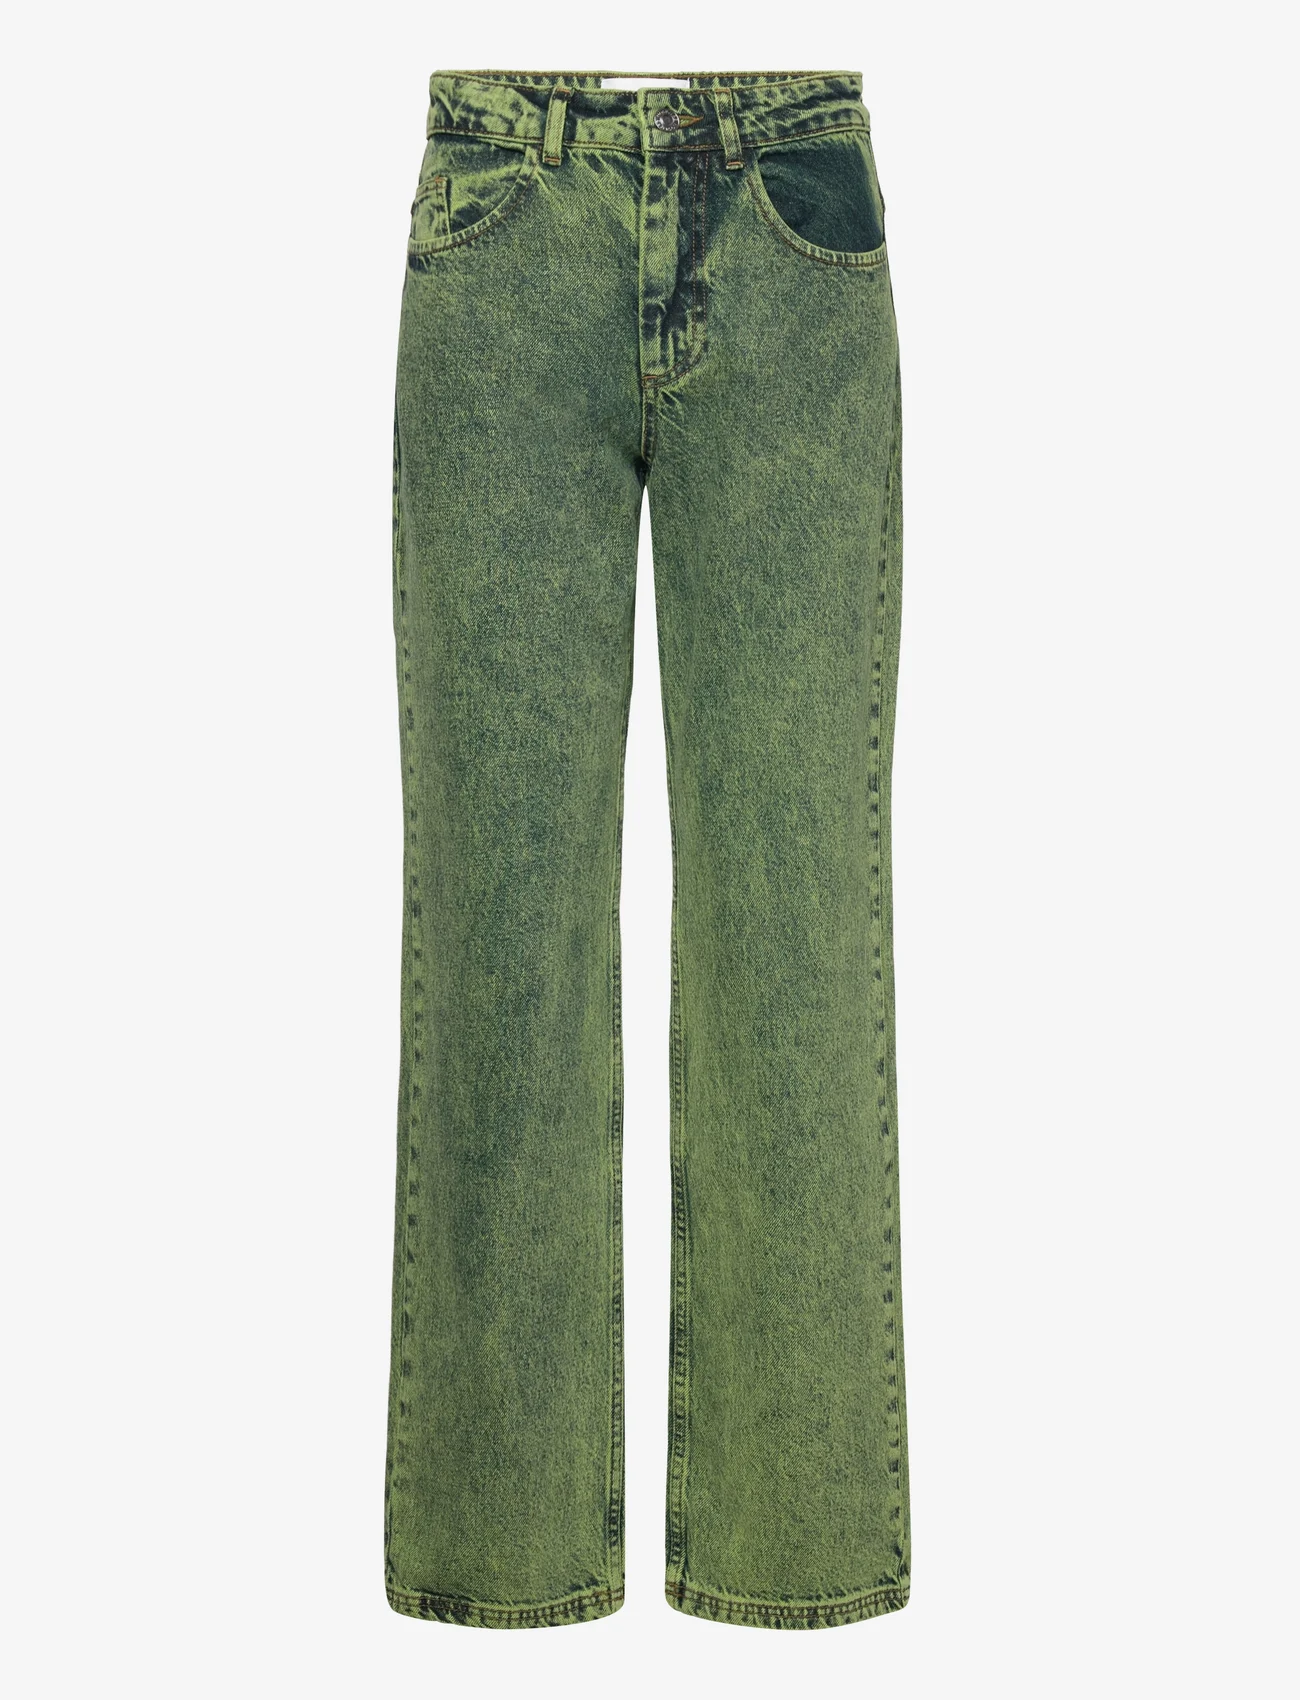 Hosbjerg - Leah Acid Denim Pants - spodnie szerokie - lime green - 0